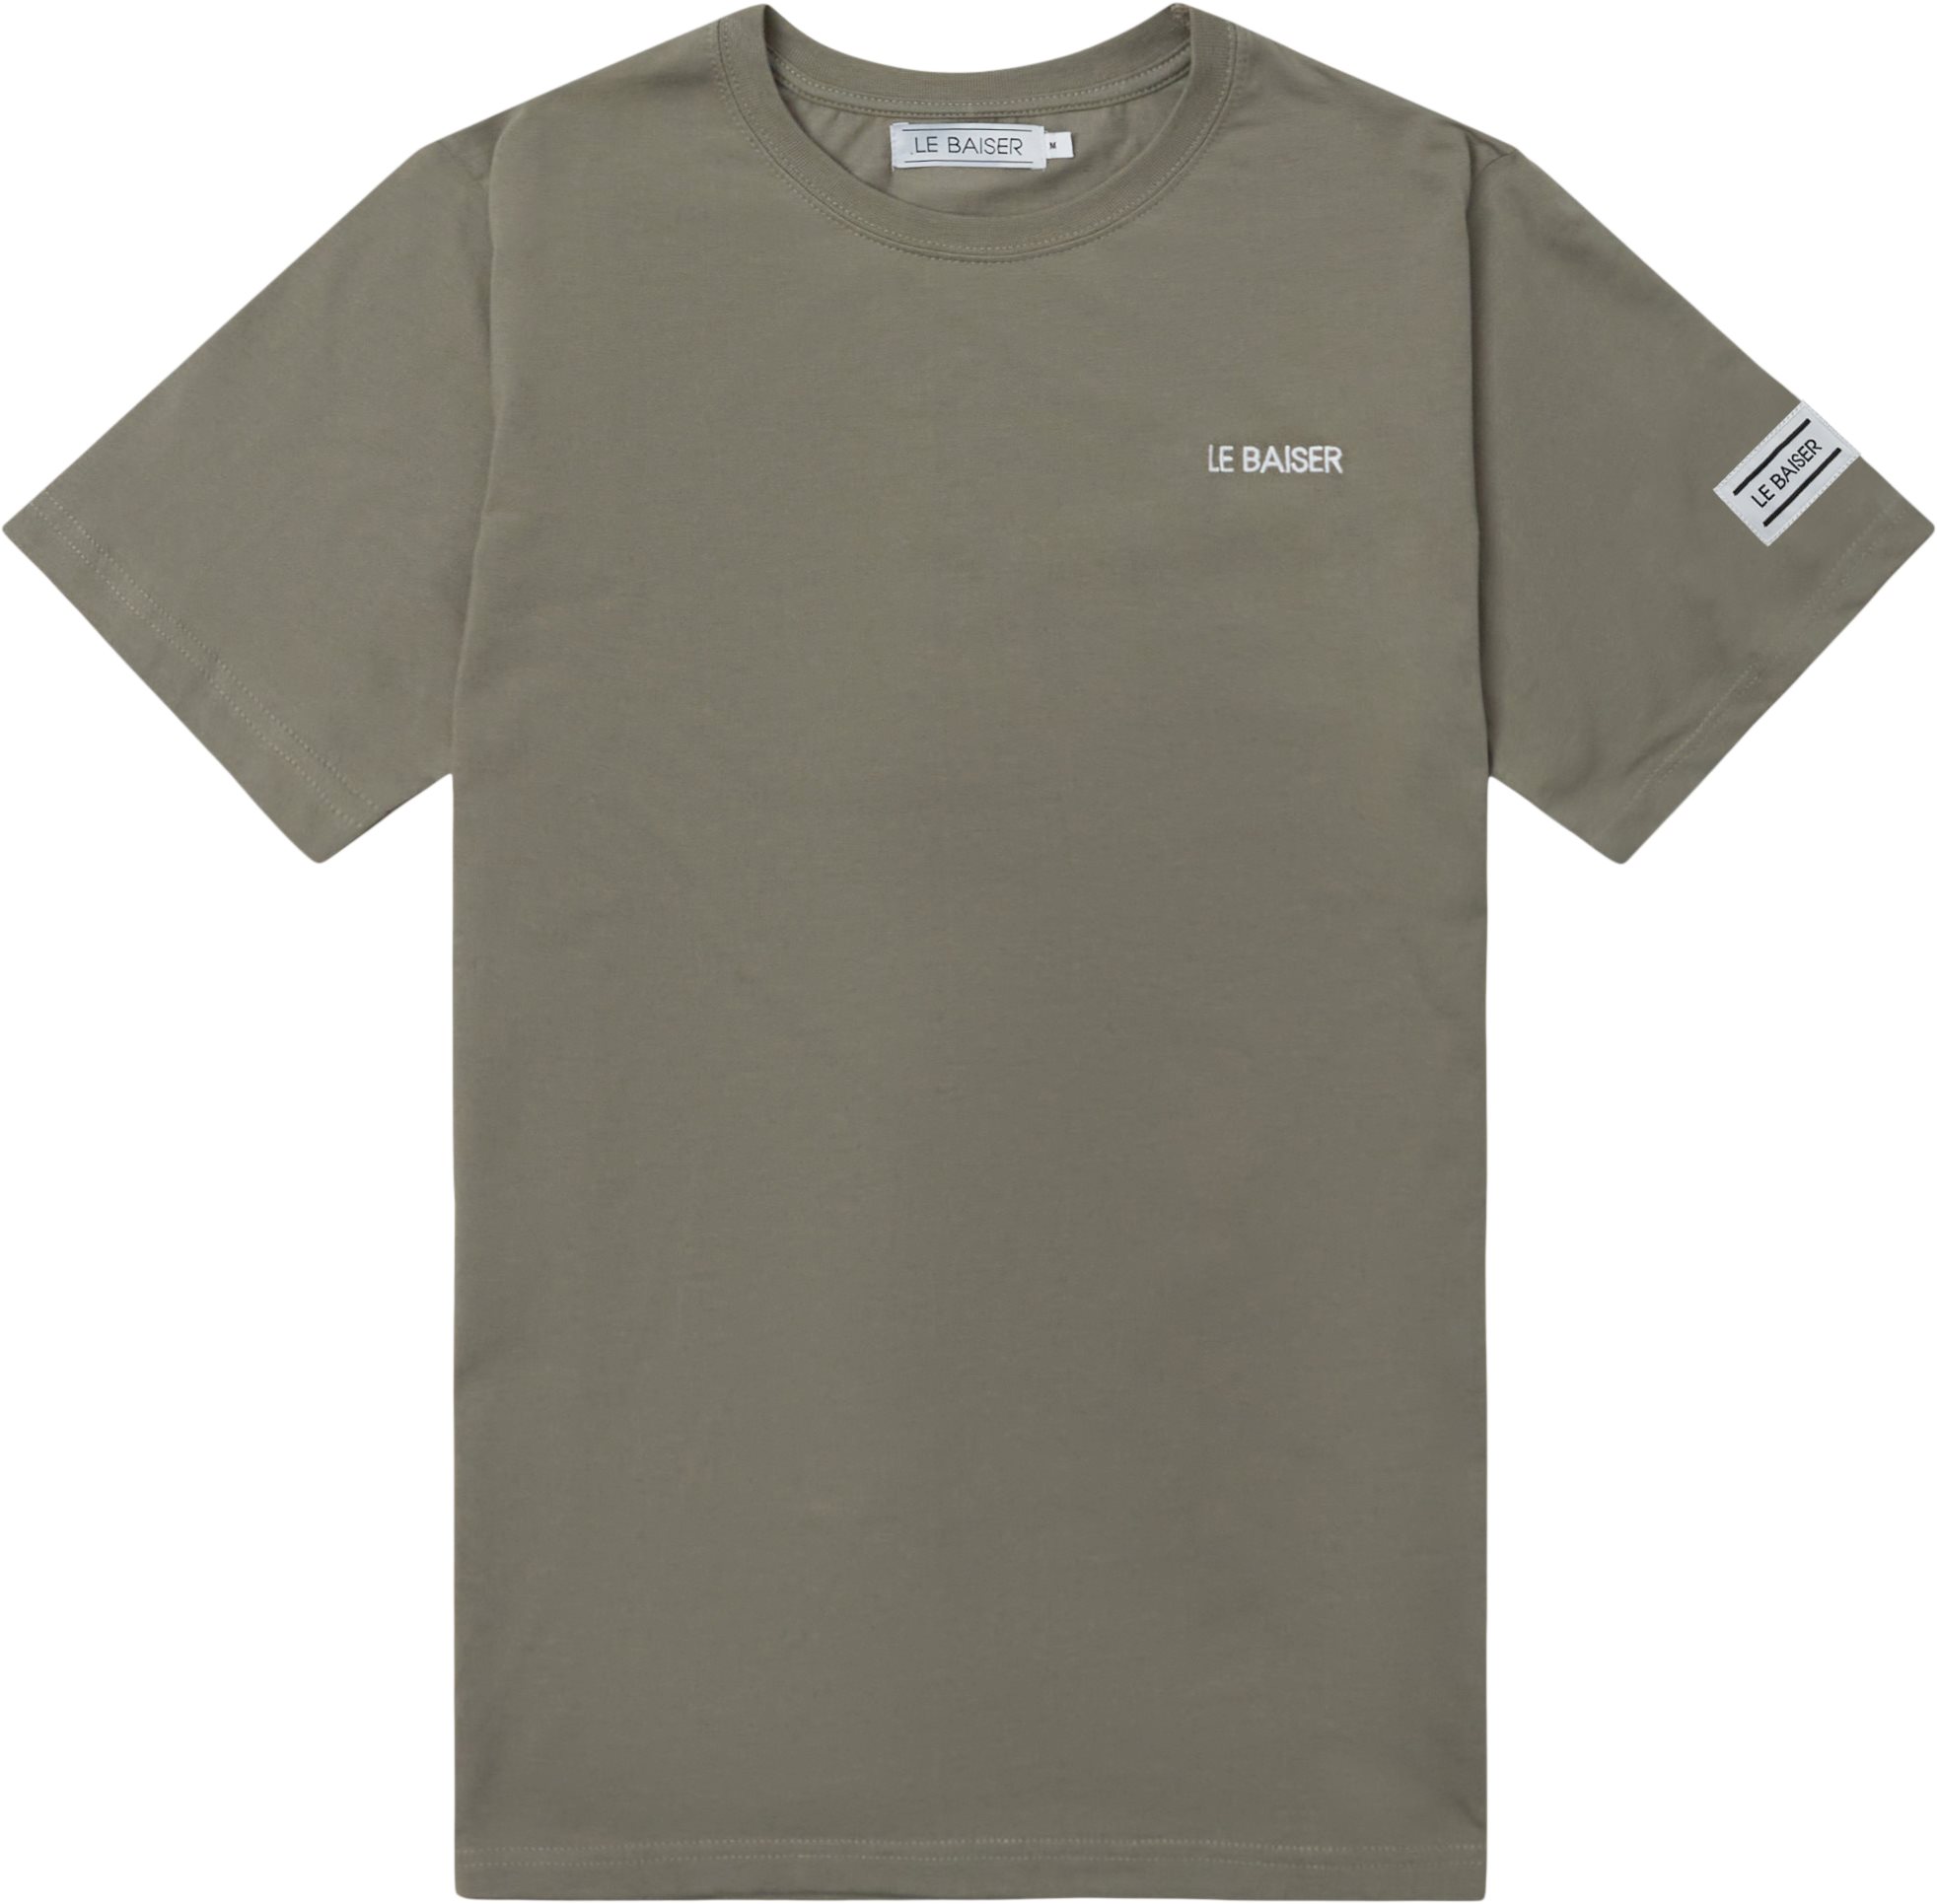 Bourg Tee - T-shirts - Regular fit - Armé